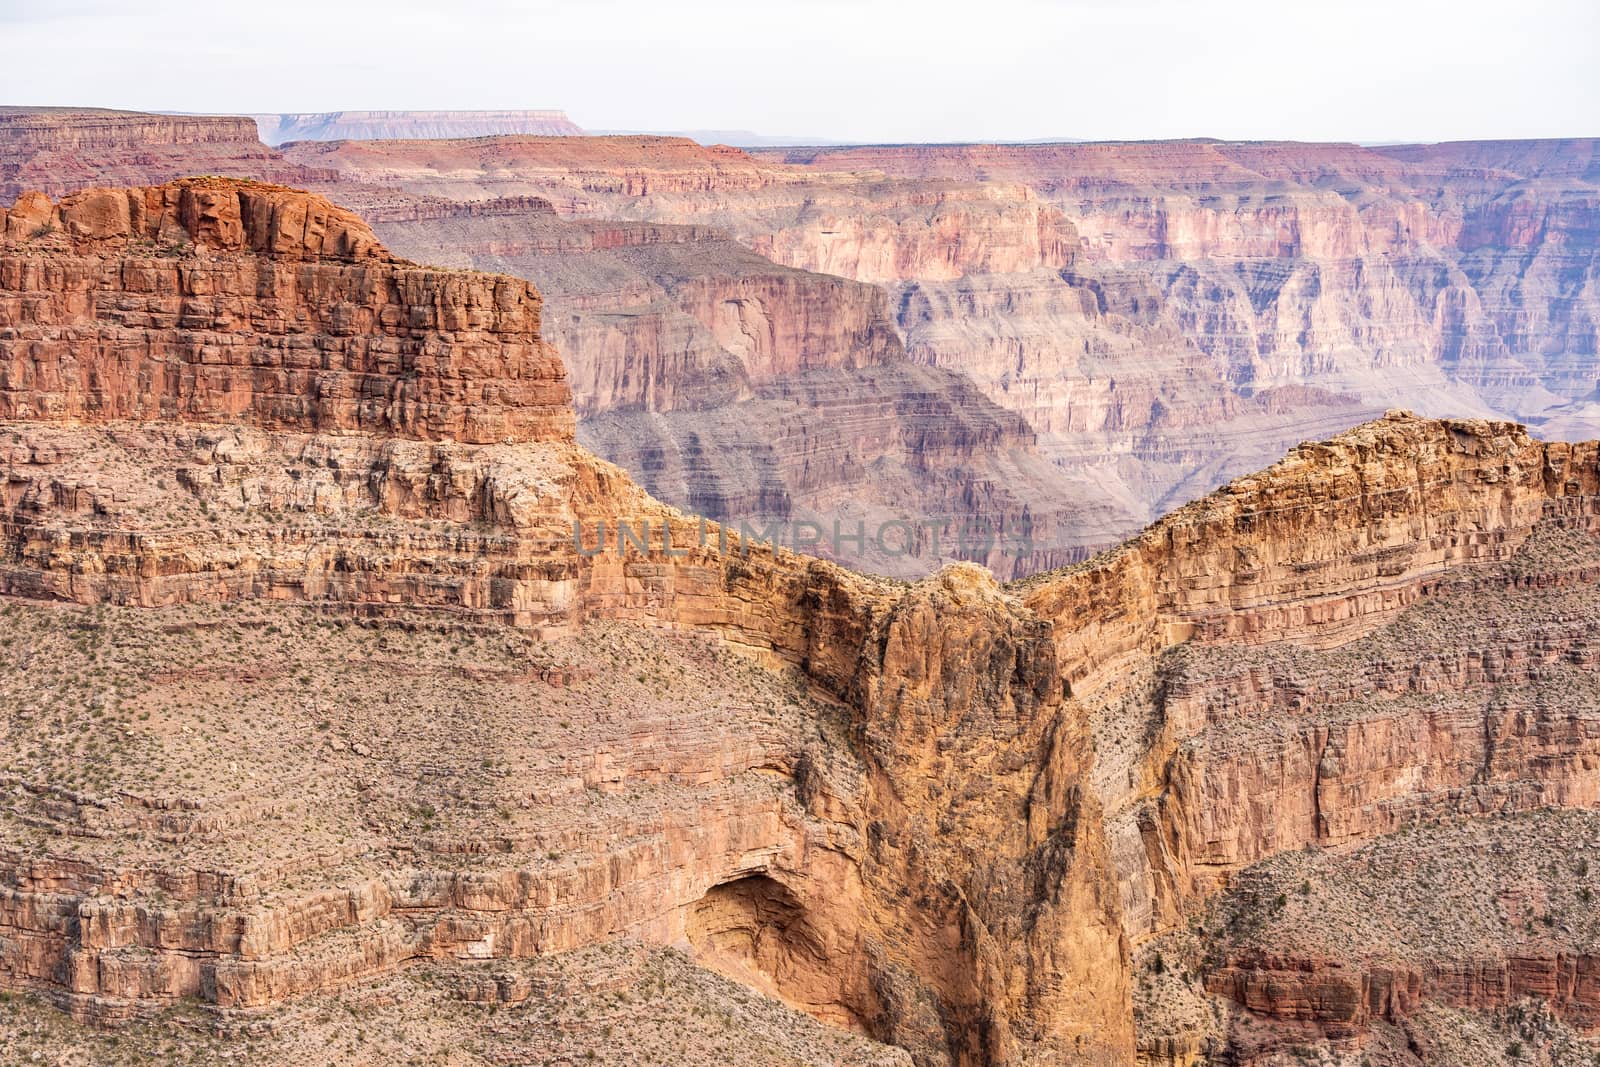 West rim of Grand Canyon in Arizona USA